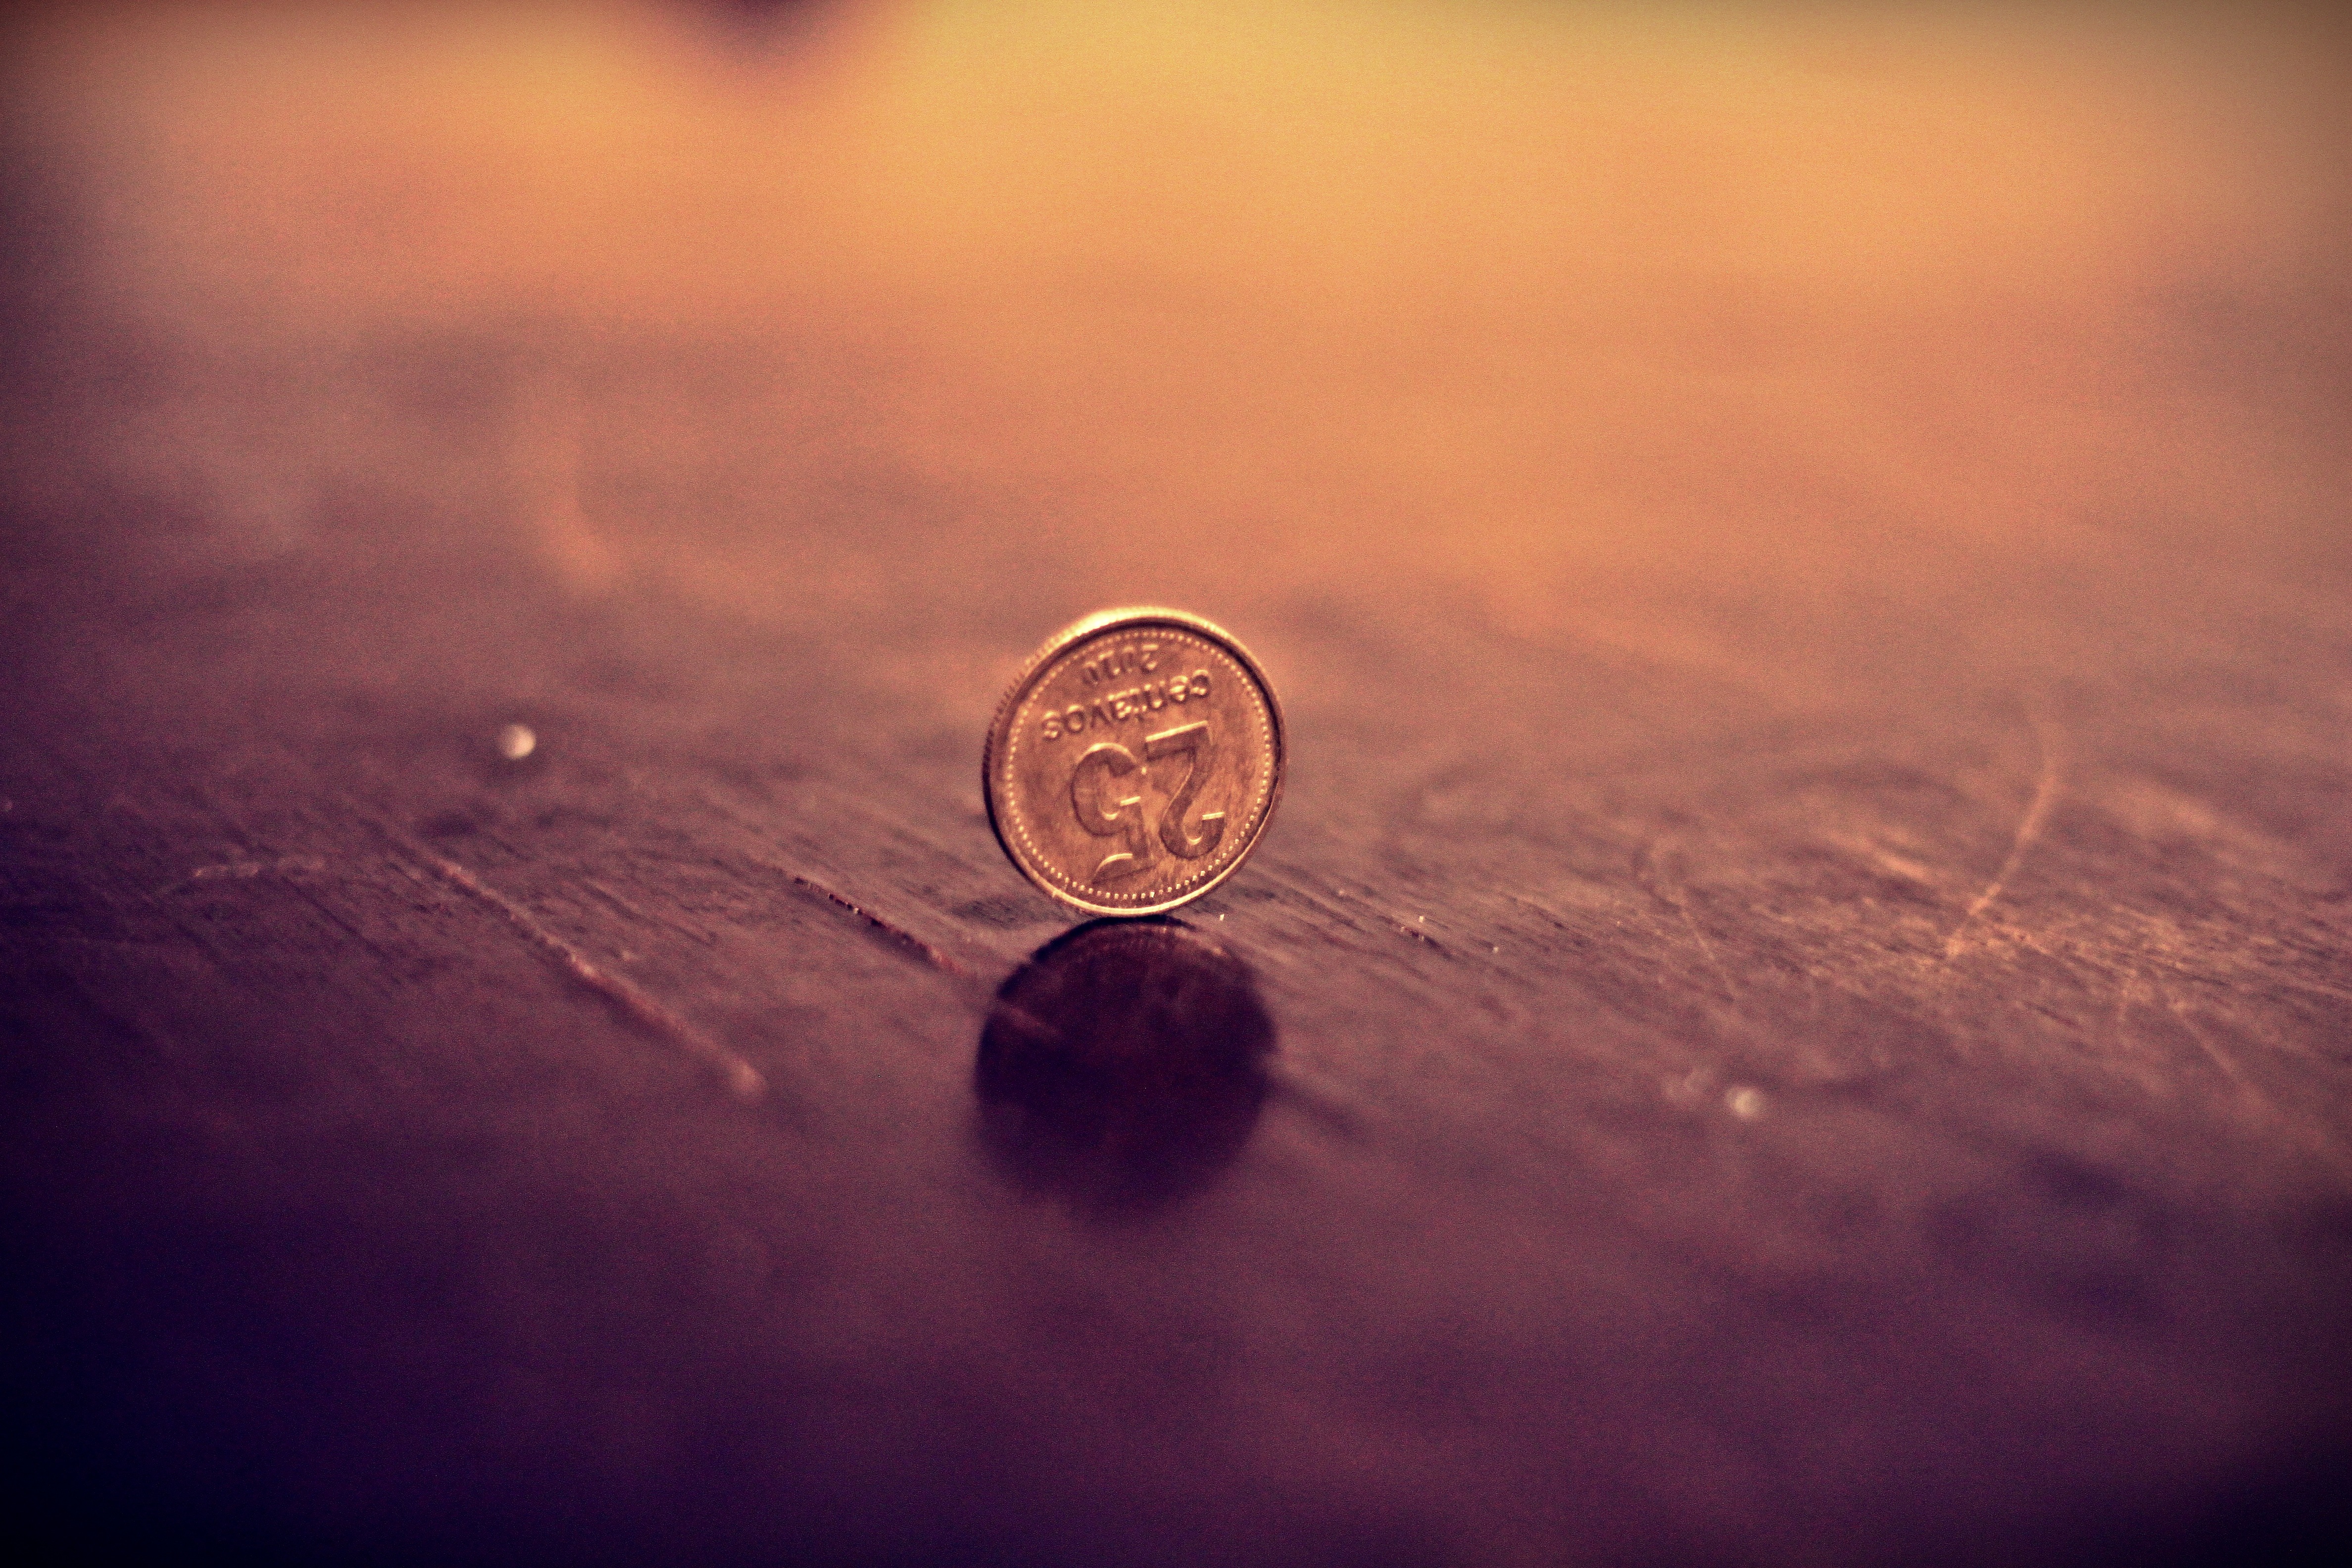 Бесплатное фото Монета 25 центов на ребре